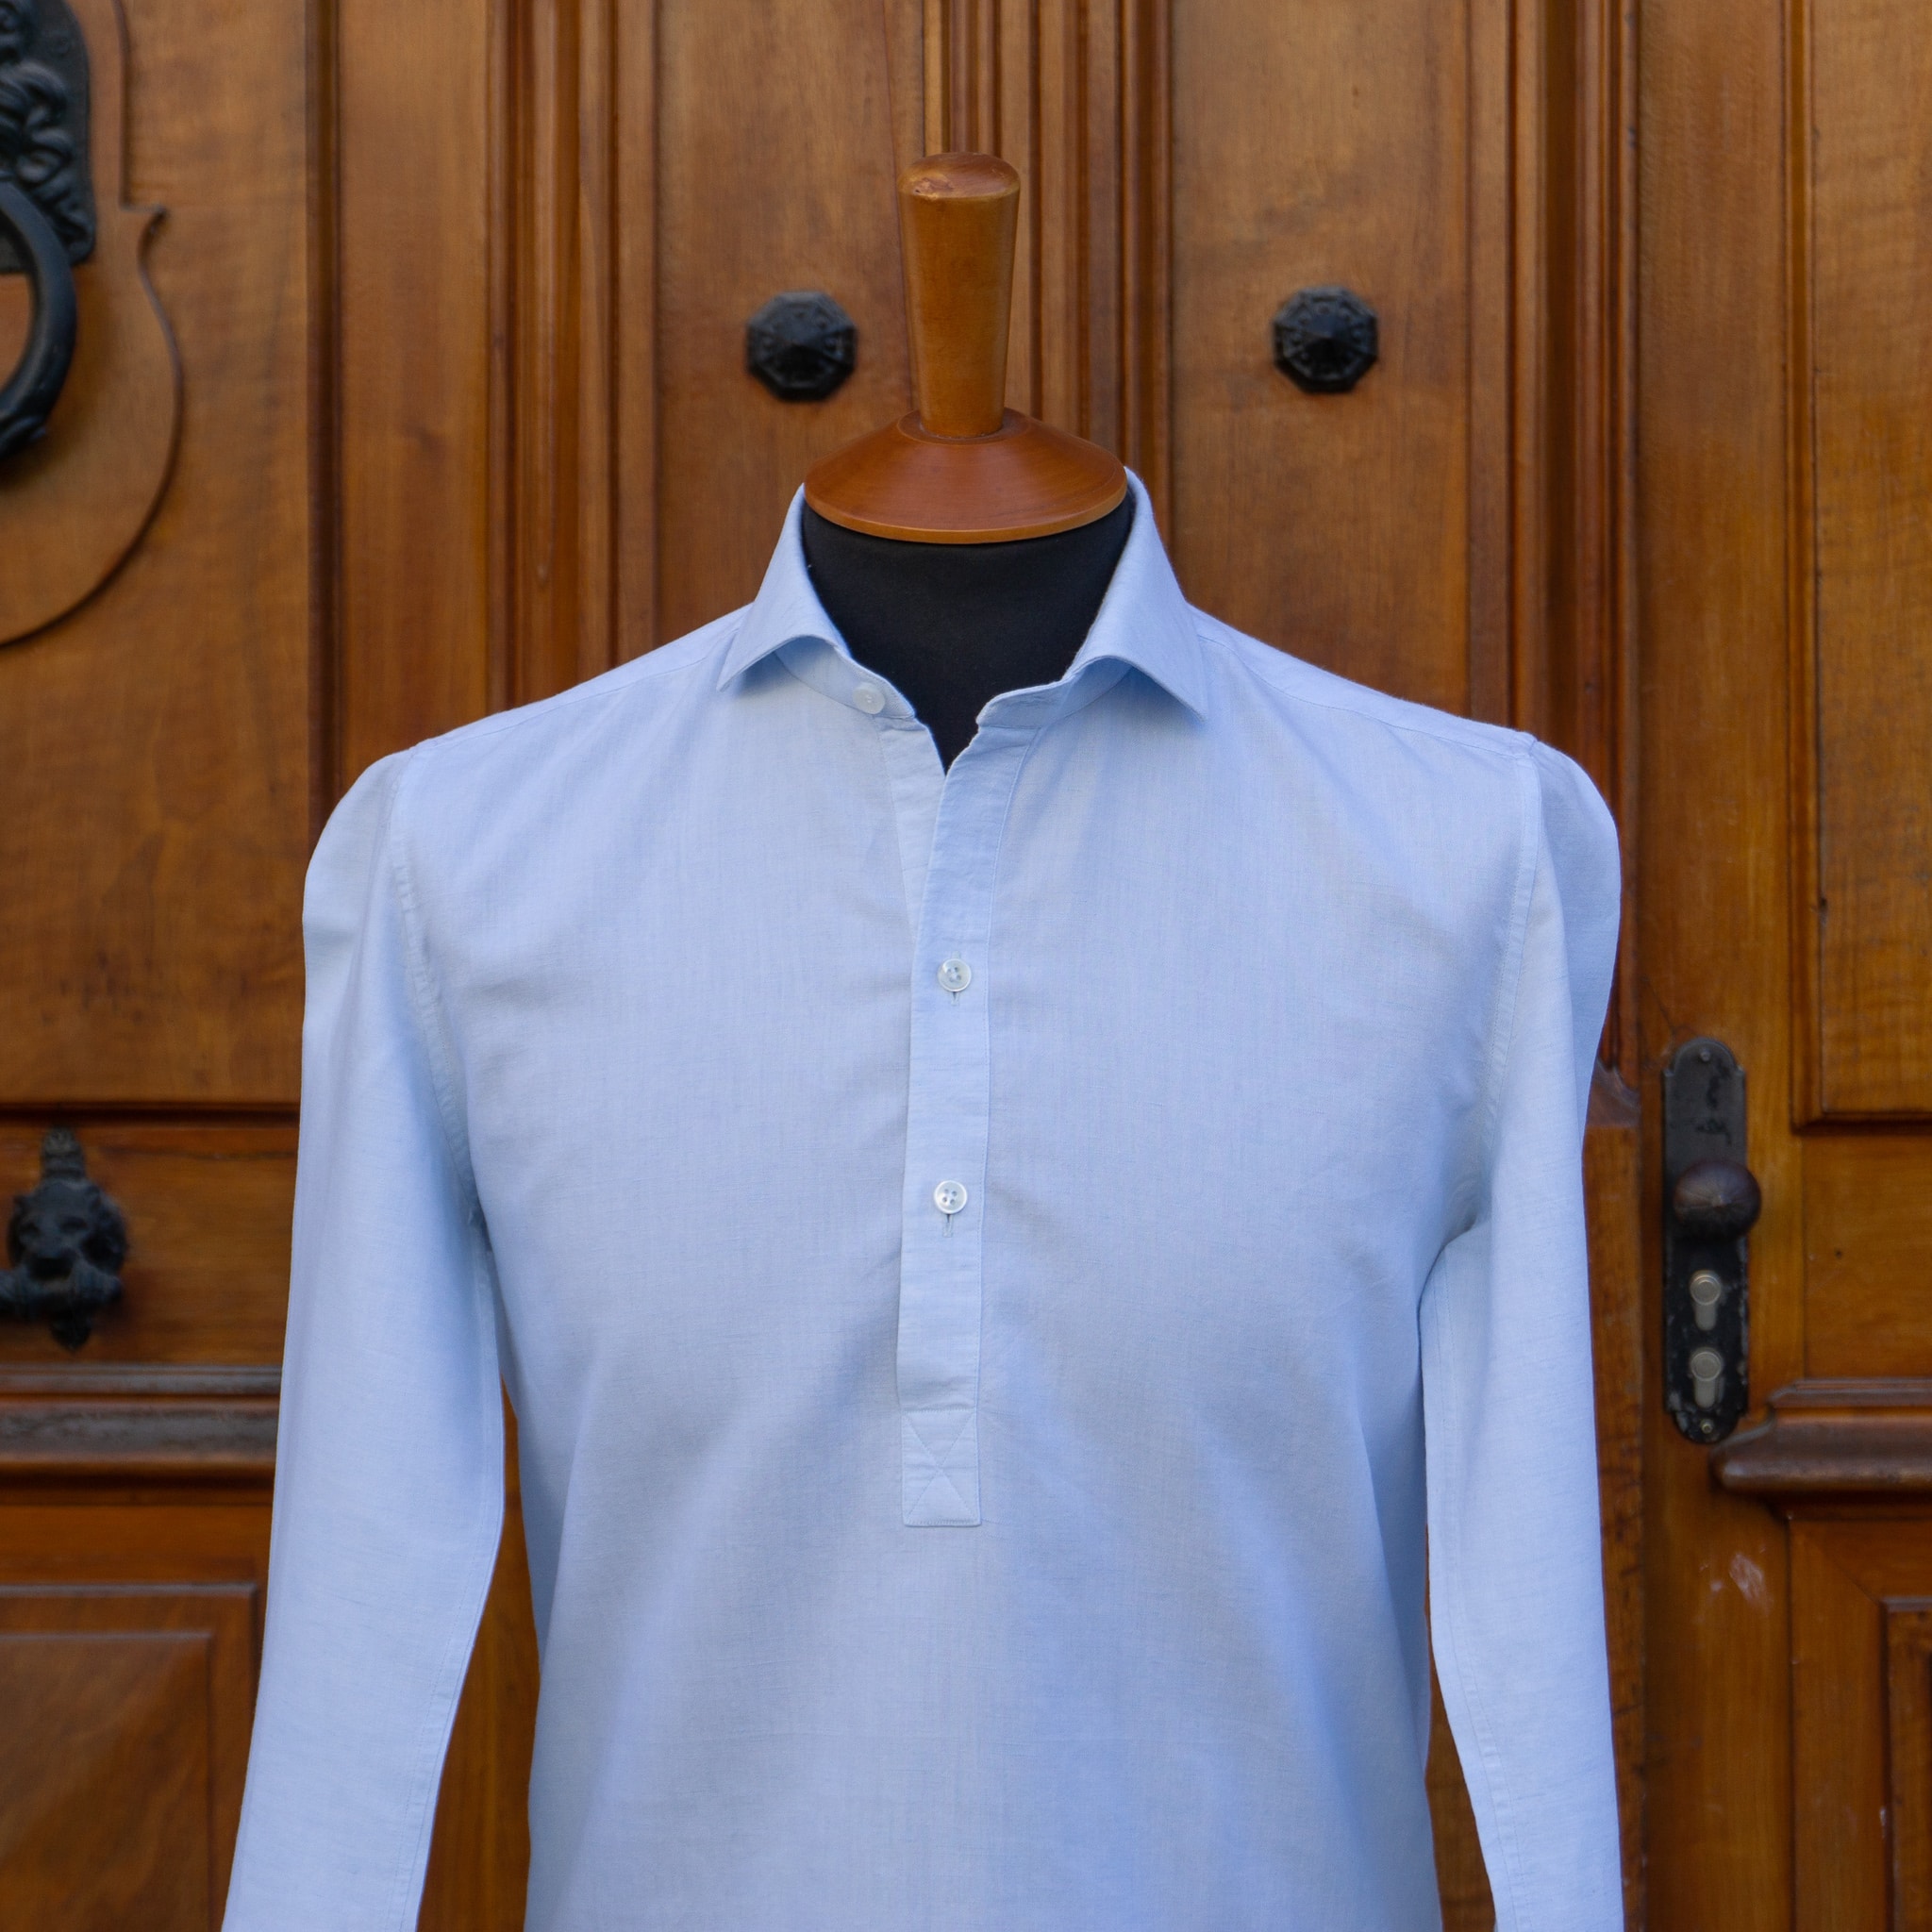 chemise polo vue buste - chemise sur mesure geneve - chemise polo - Revenga Chemisiers Genevois